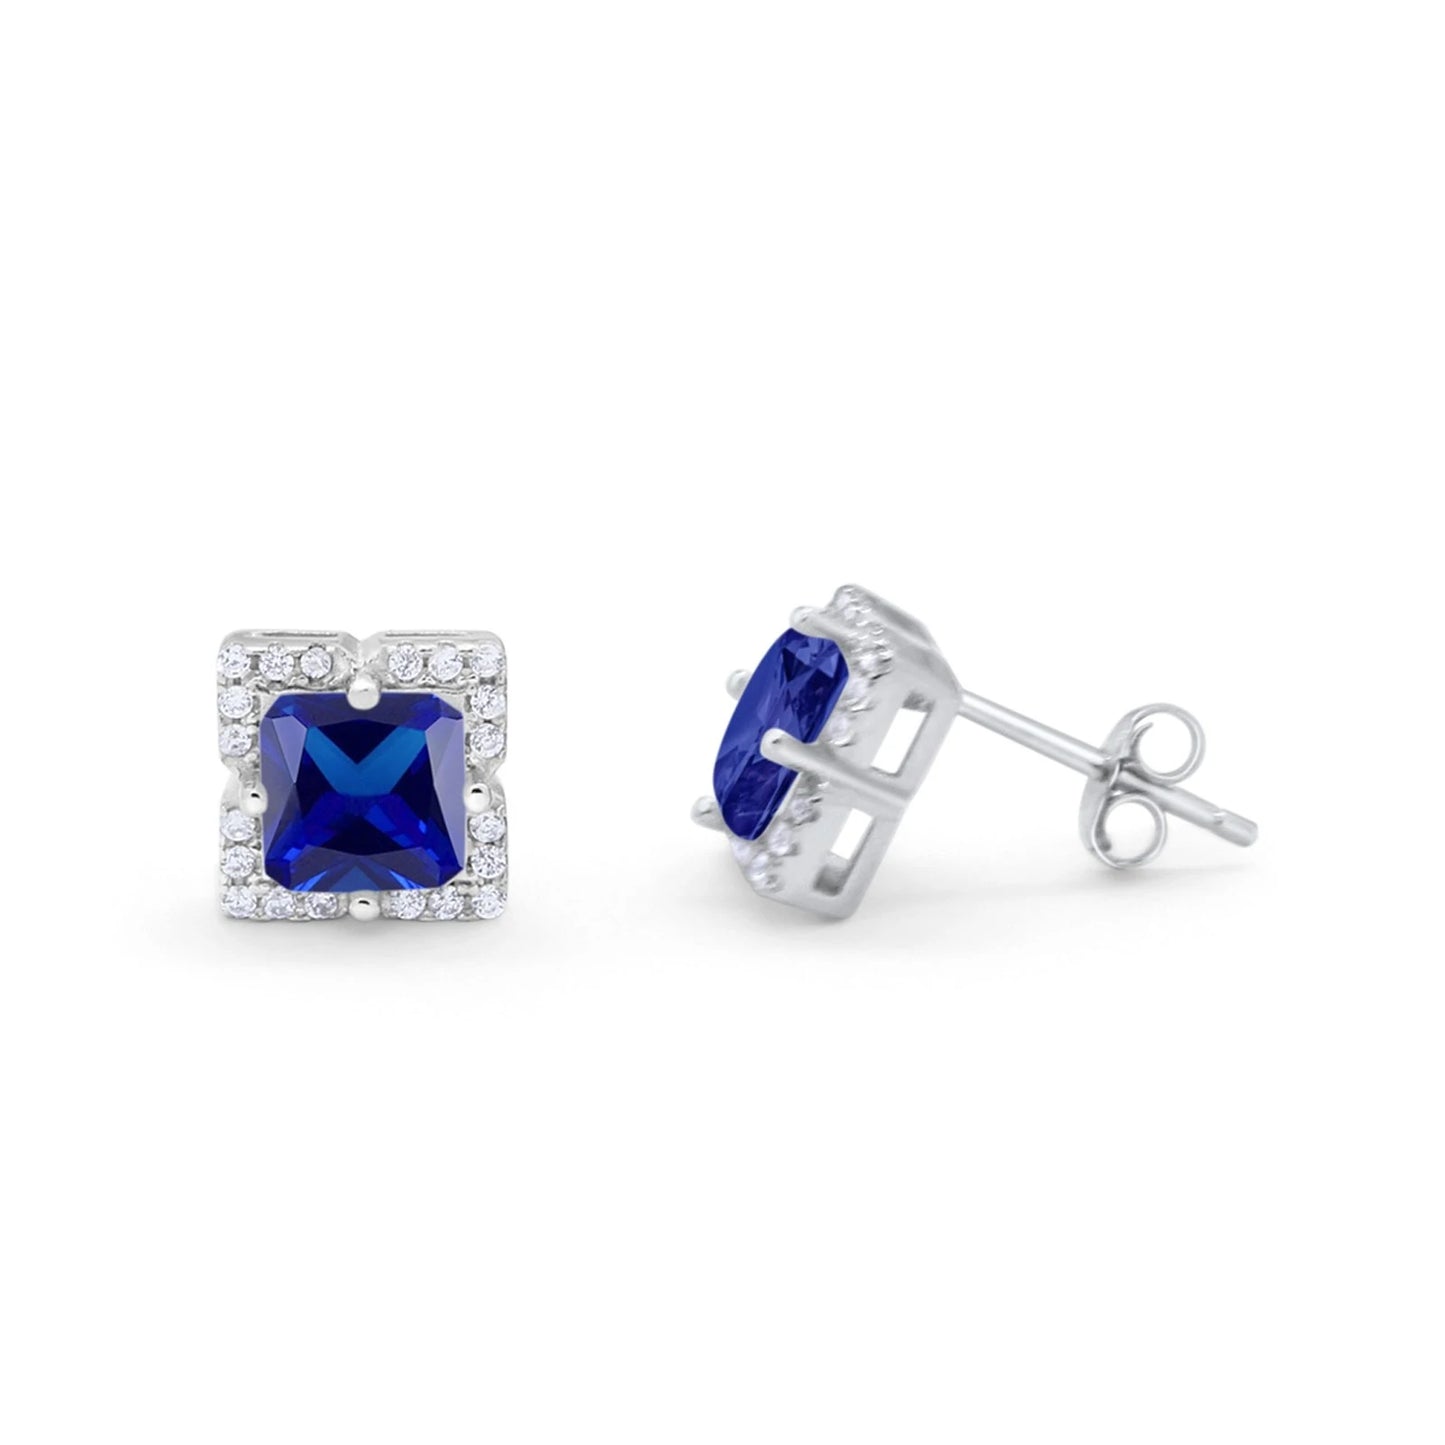 Sterling Silver Halo Princess Cut Bridal Blue Sapphire CZ Stud Earrings